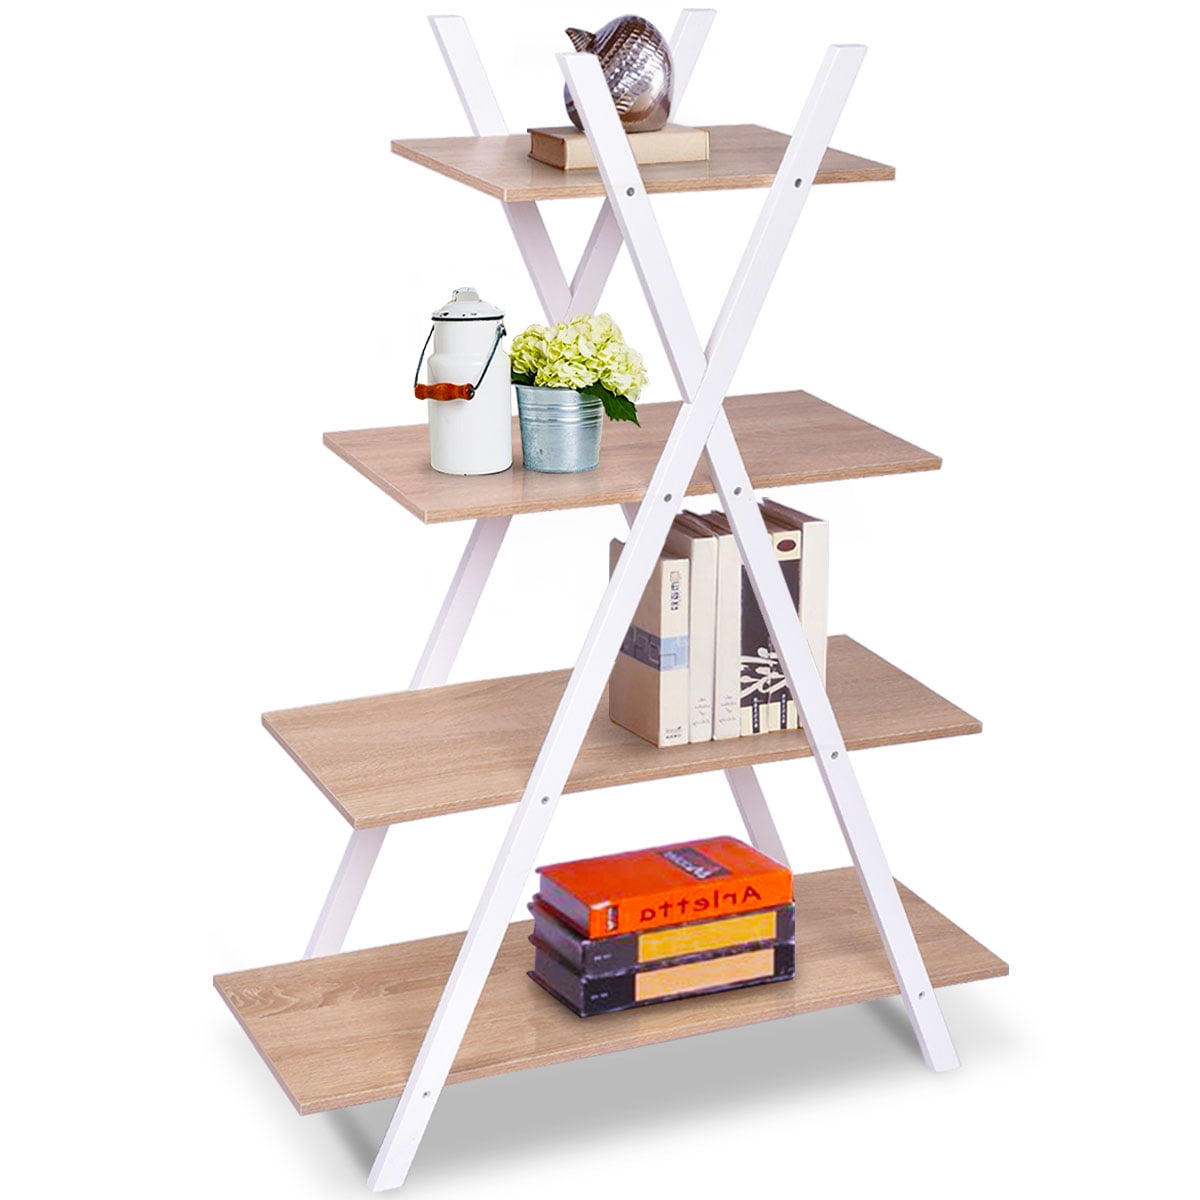 Panghuhu88 2-Tier Bookcase and Bookshelf S Shaped Display Shelf，Z-Shelf Bookshelves Walnut&23.6 x 9.5 x 25.6 Ladder Modern Storage Organizer Industrial Style,for Living Room&Office